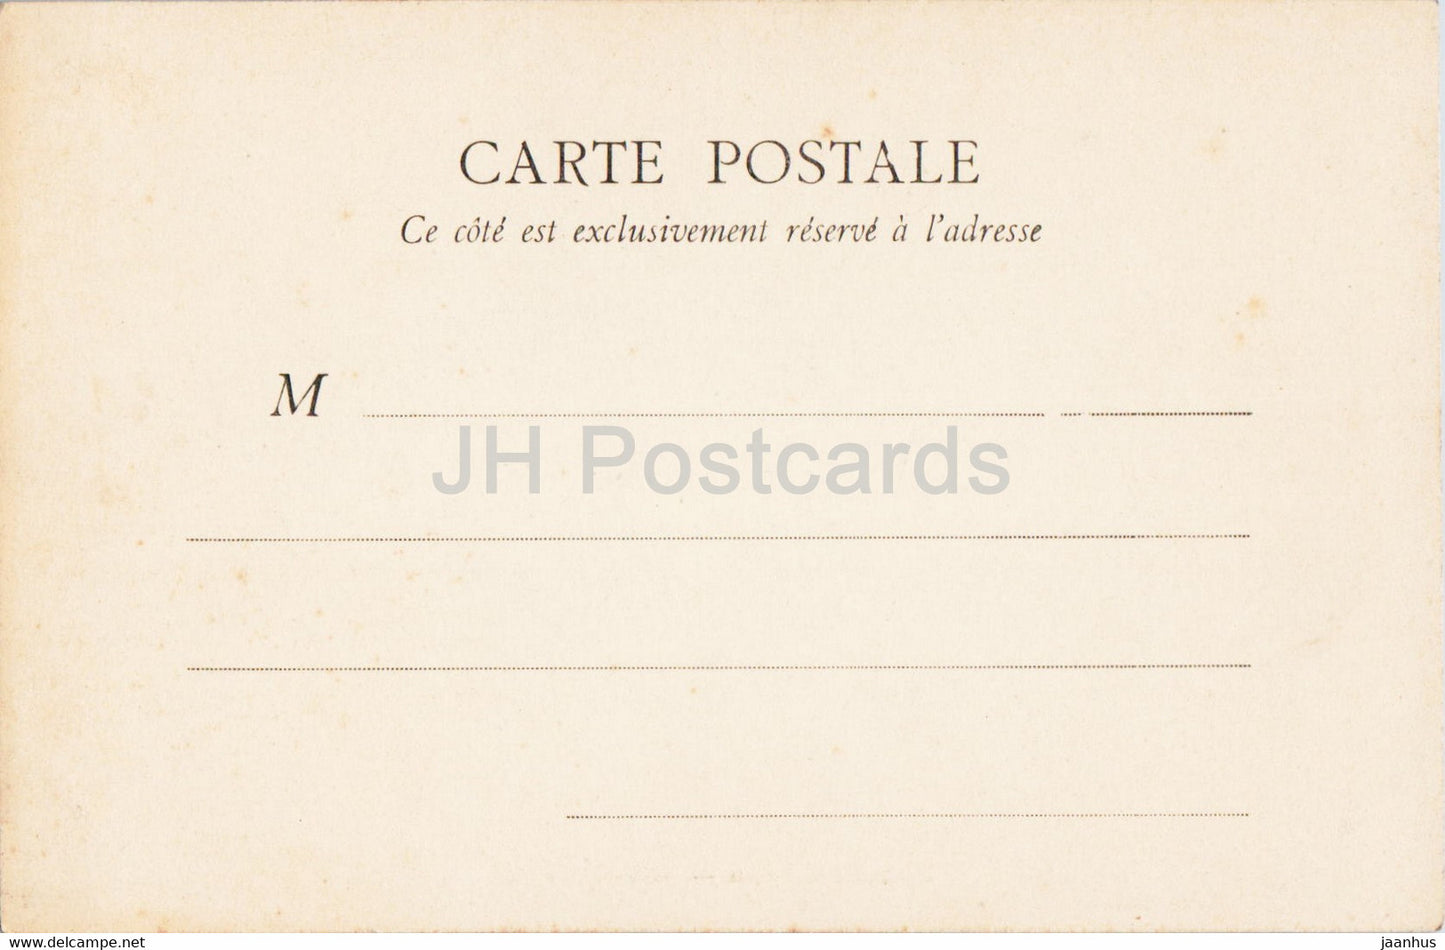 Fontainebleau - Salle du Trone - old postcard - France - unused